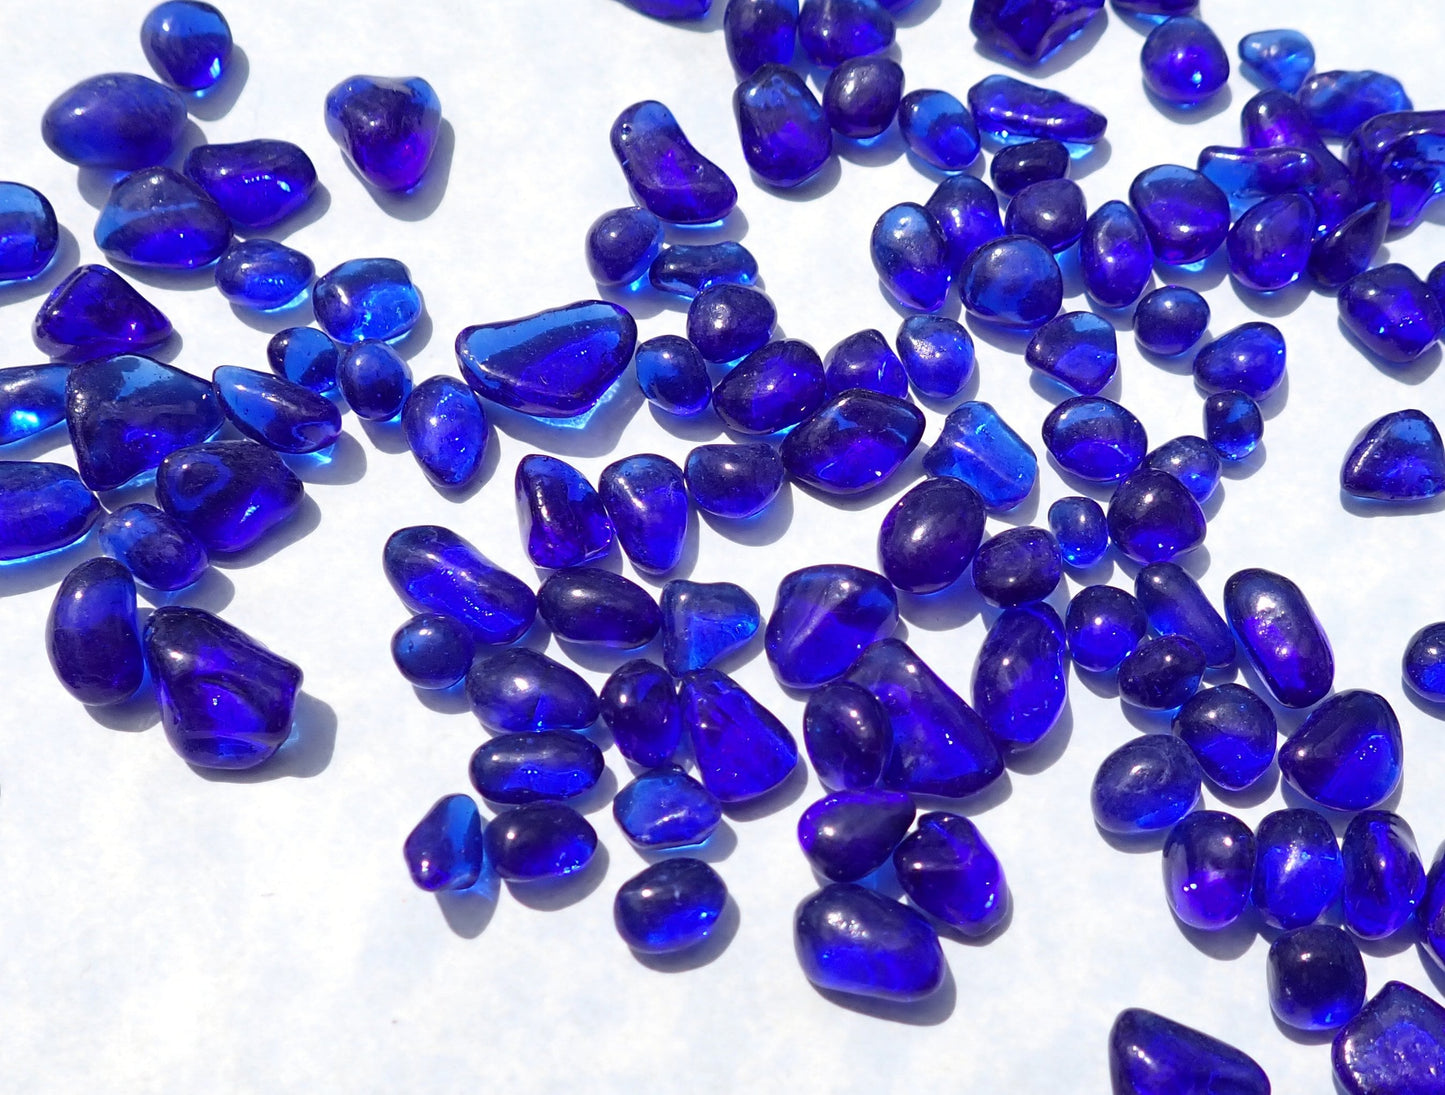 Blue Tumbled Glass Pebbles - Half Pound - Vase Fillers - Cottage Decor Wedding - Aquarium Gravel